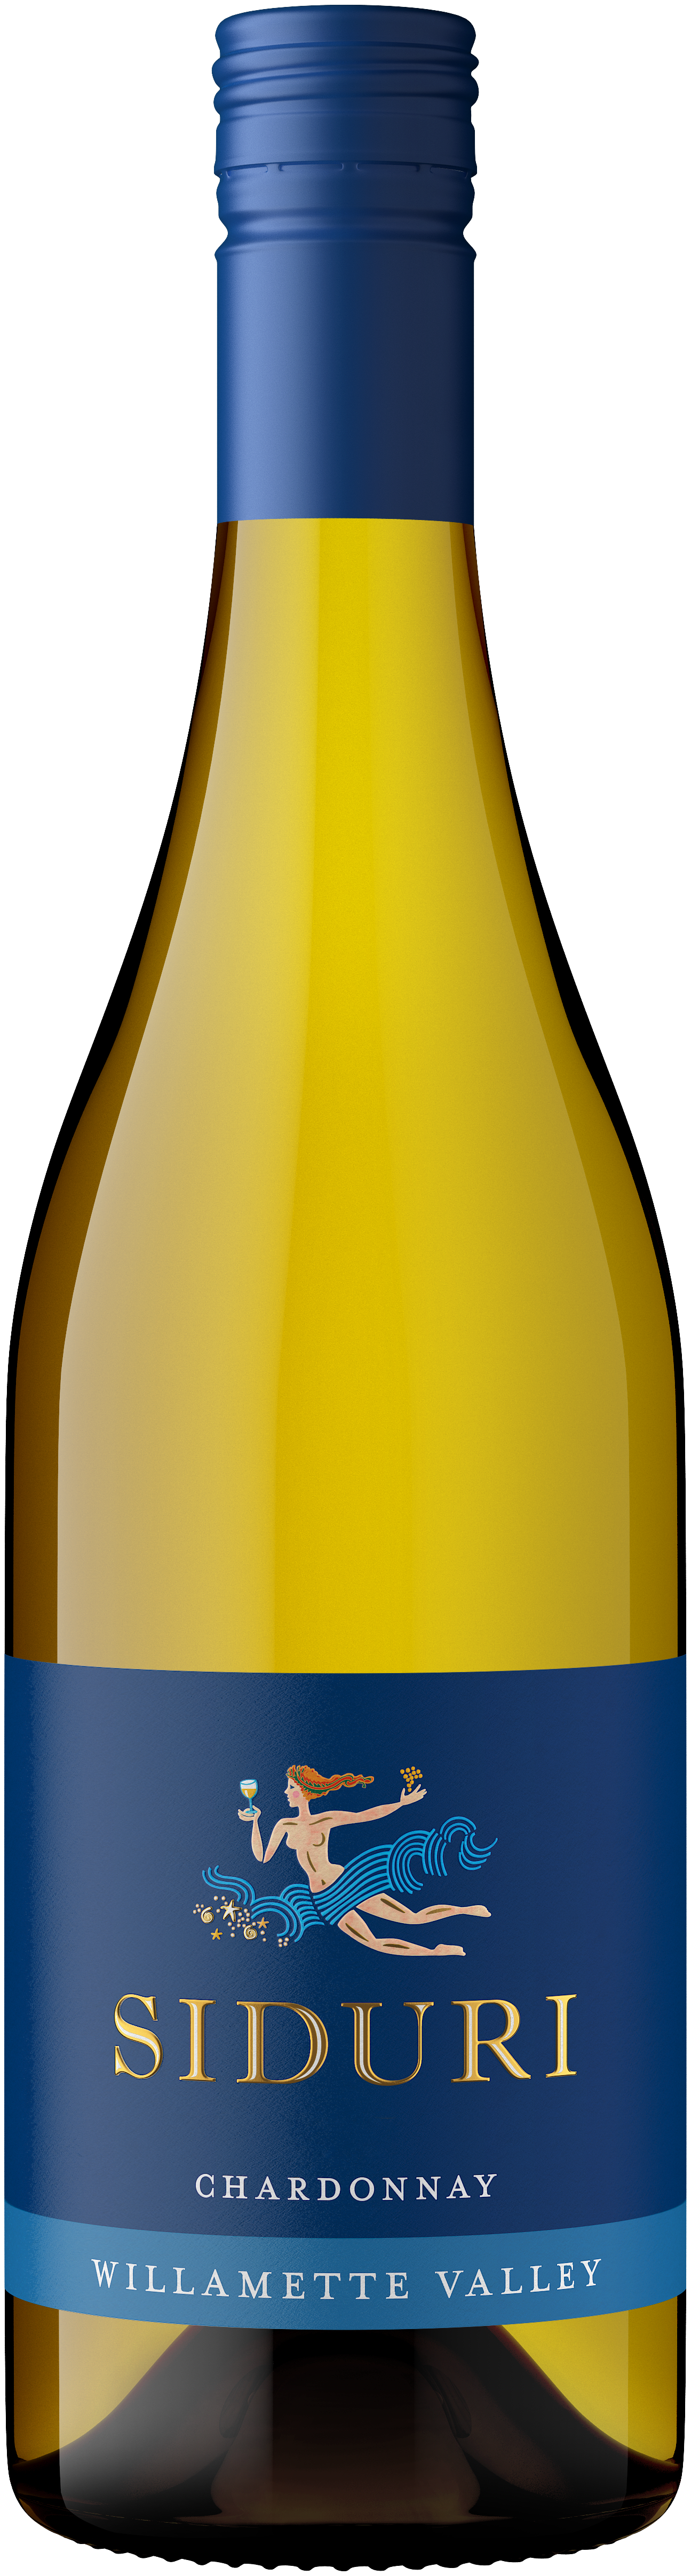 2020 Siduri Chardonnay Willamette Valley